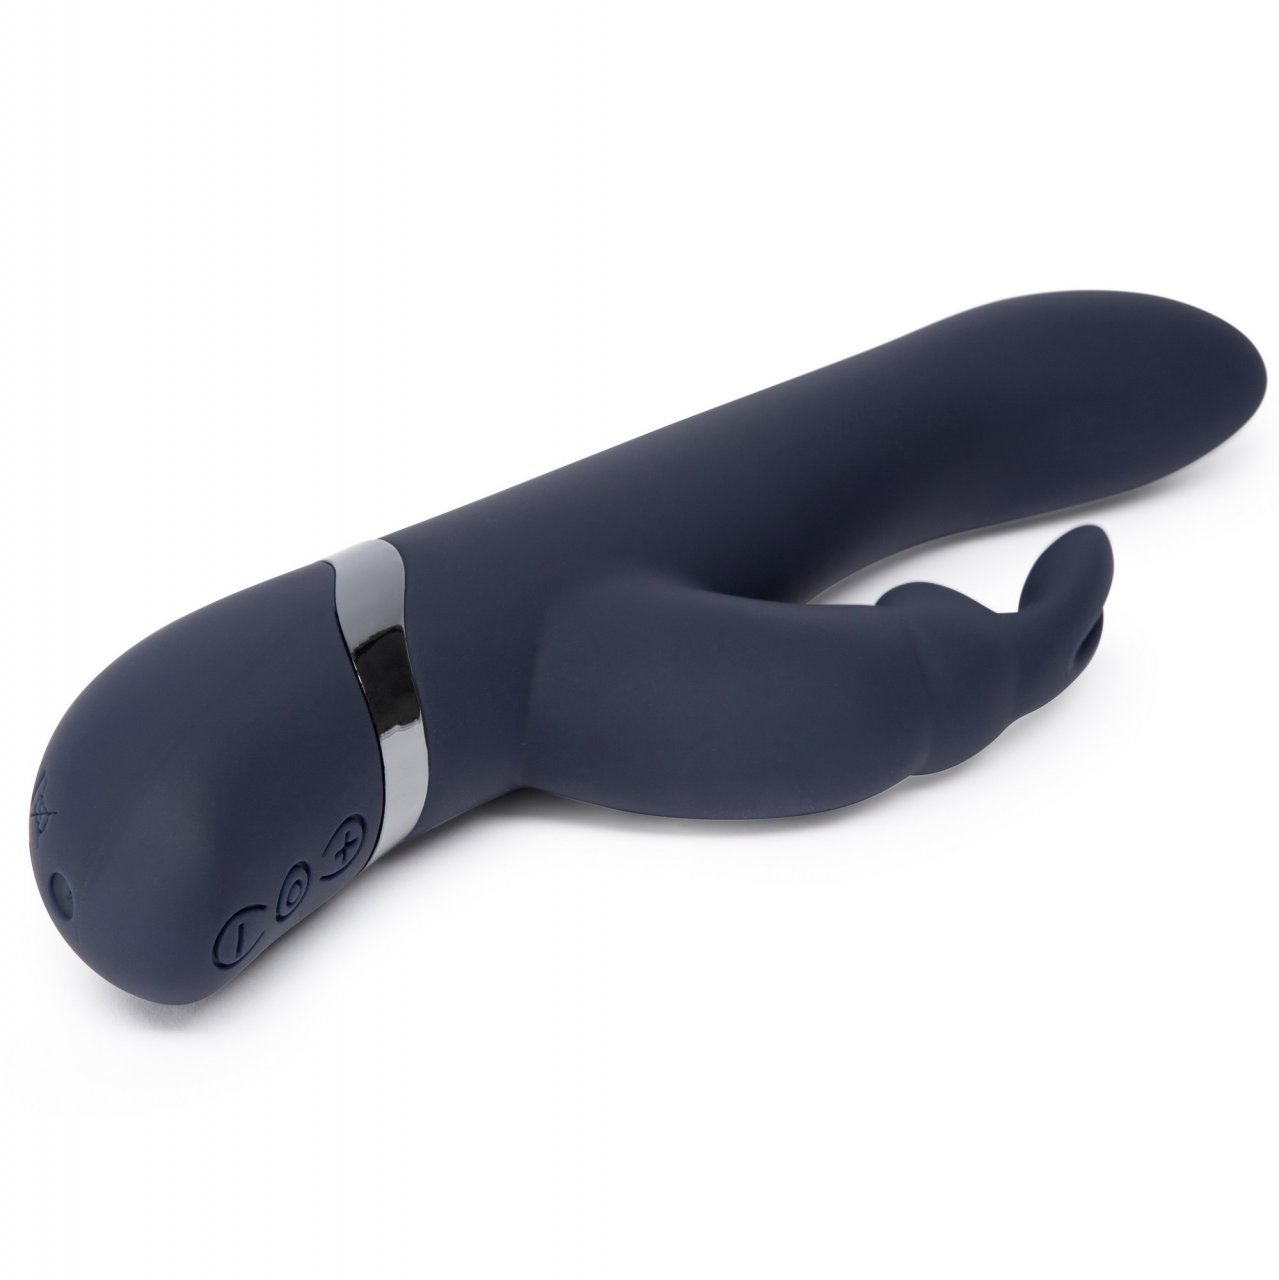 Oh My, the vibrator with clitoris stimulator